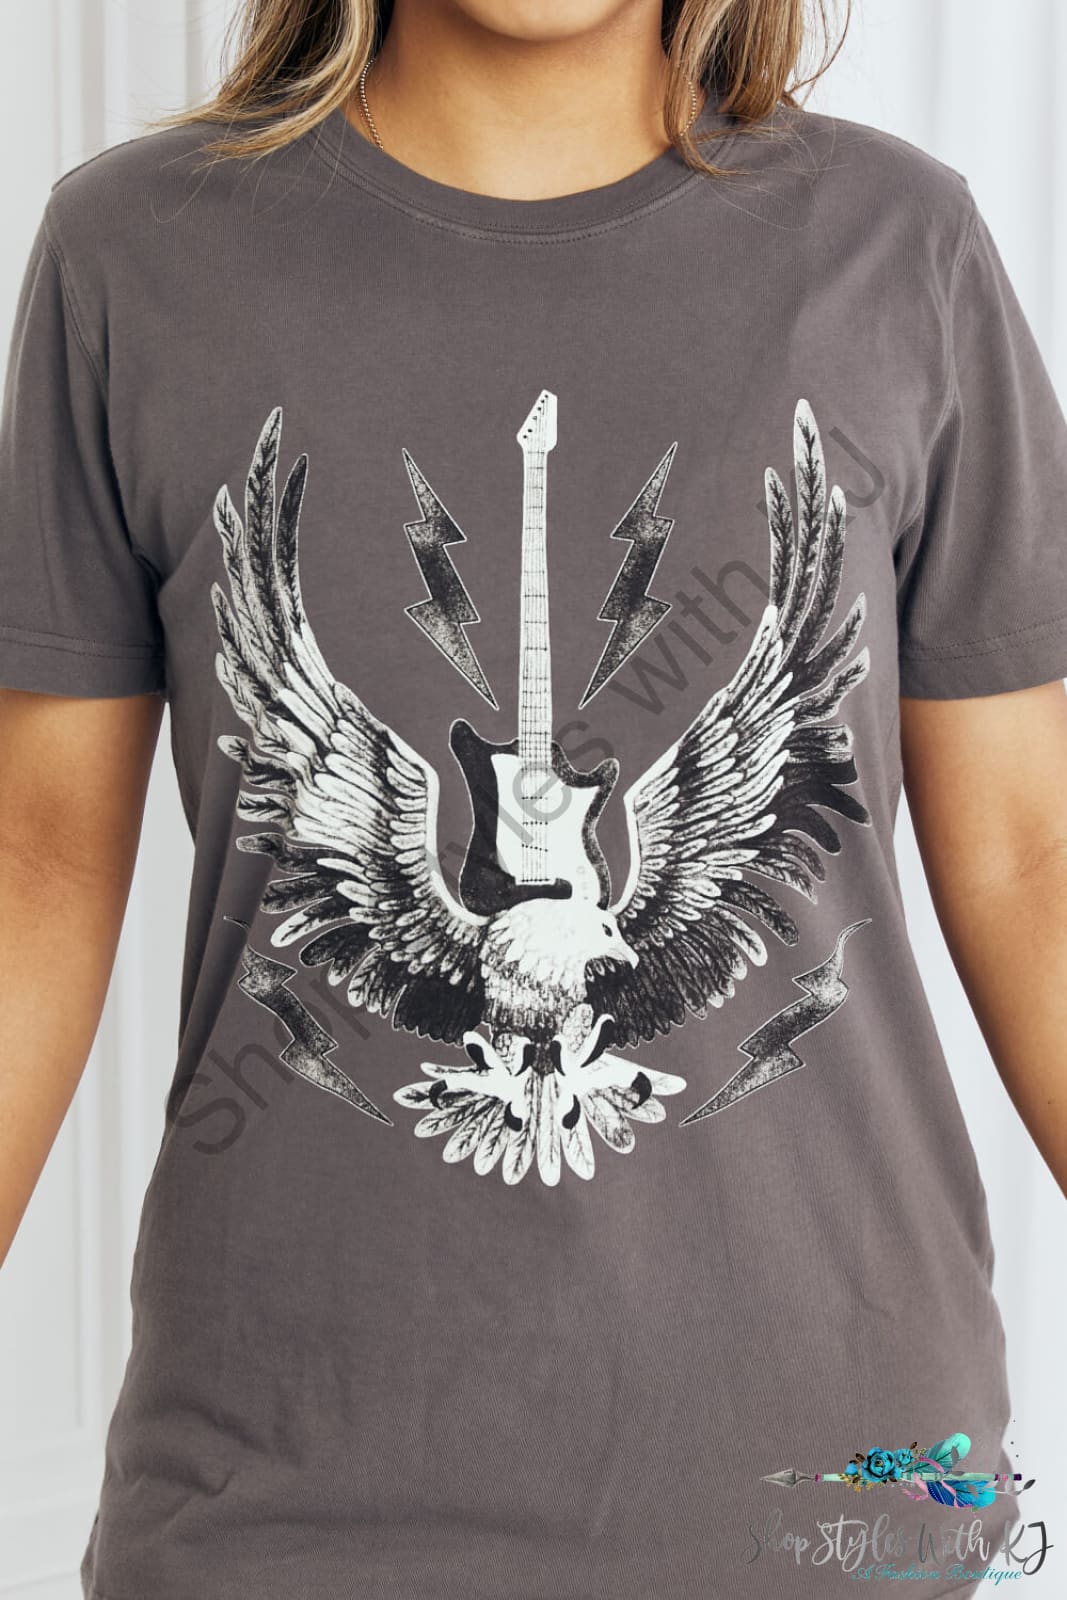 Eagle Graphic Tee Shirt Shirts & Tops